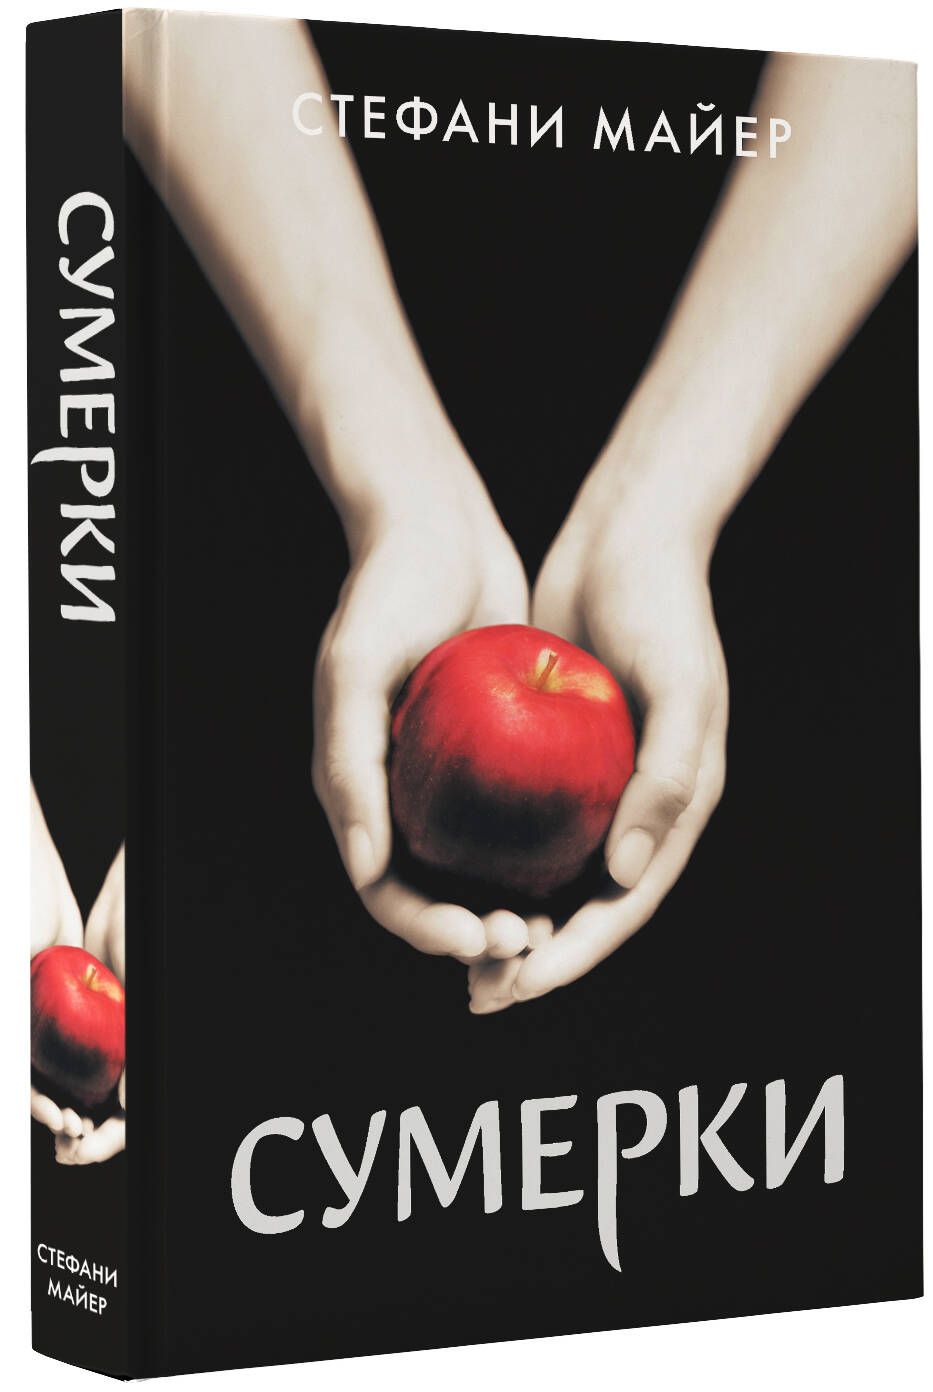 Стефани Майер "Сумерки". Обложки книг Сумерки Стефани Майер. Twilight Stephenie Meyer book.